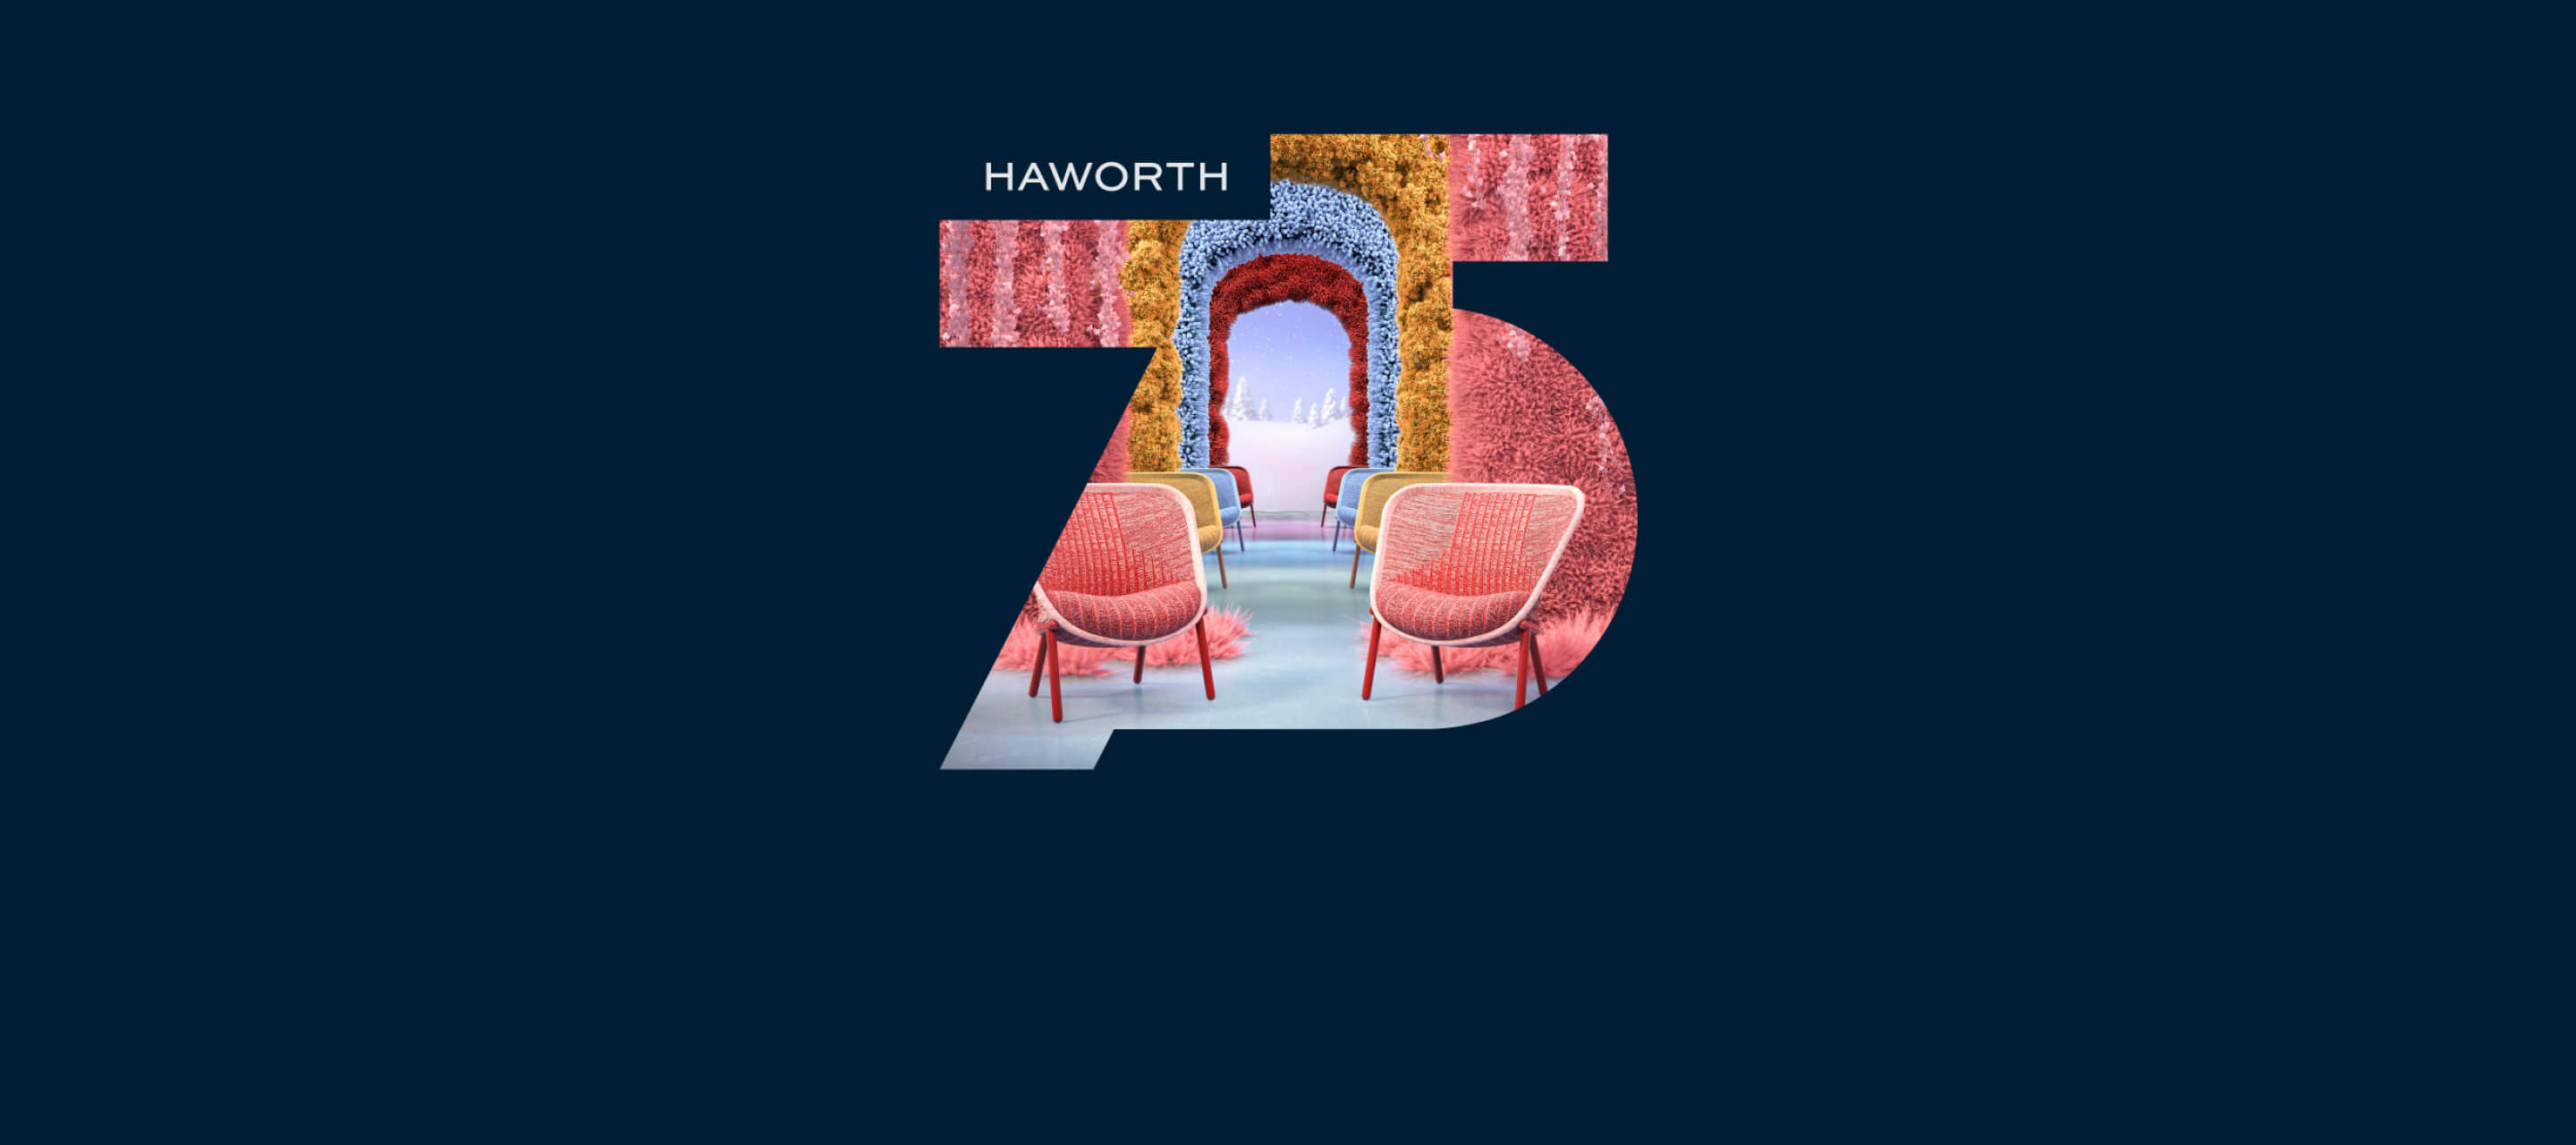 Haworth at Neocon celebrating their 75 years/